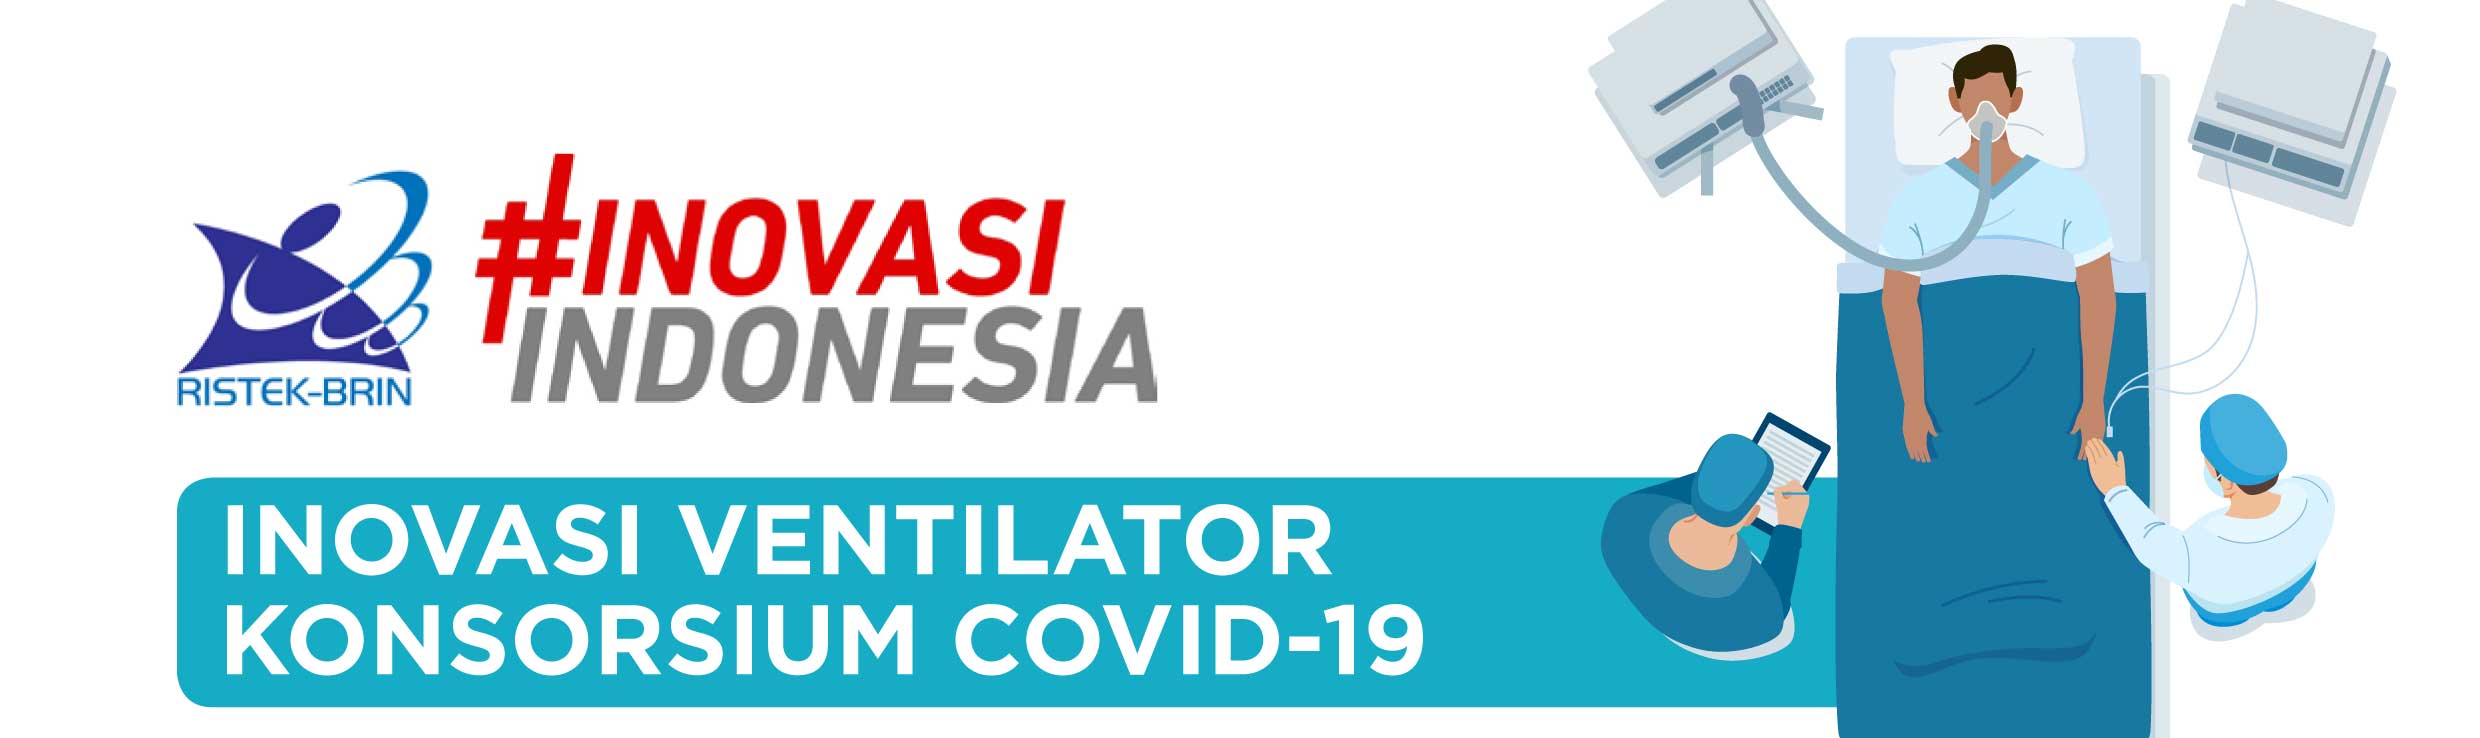 Inovasi Ventilator Konsorsium Covid-19